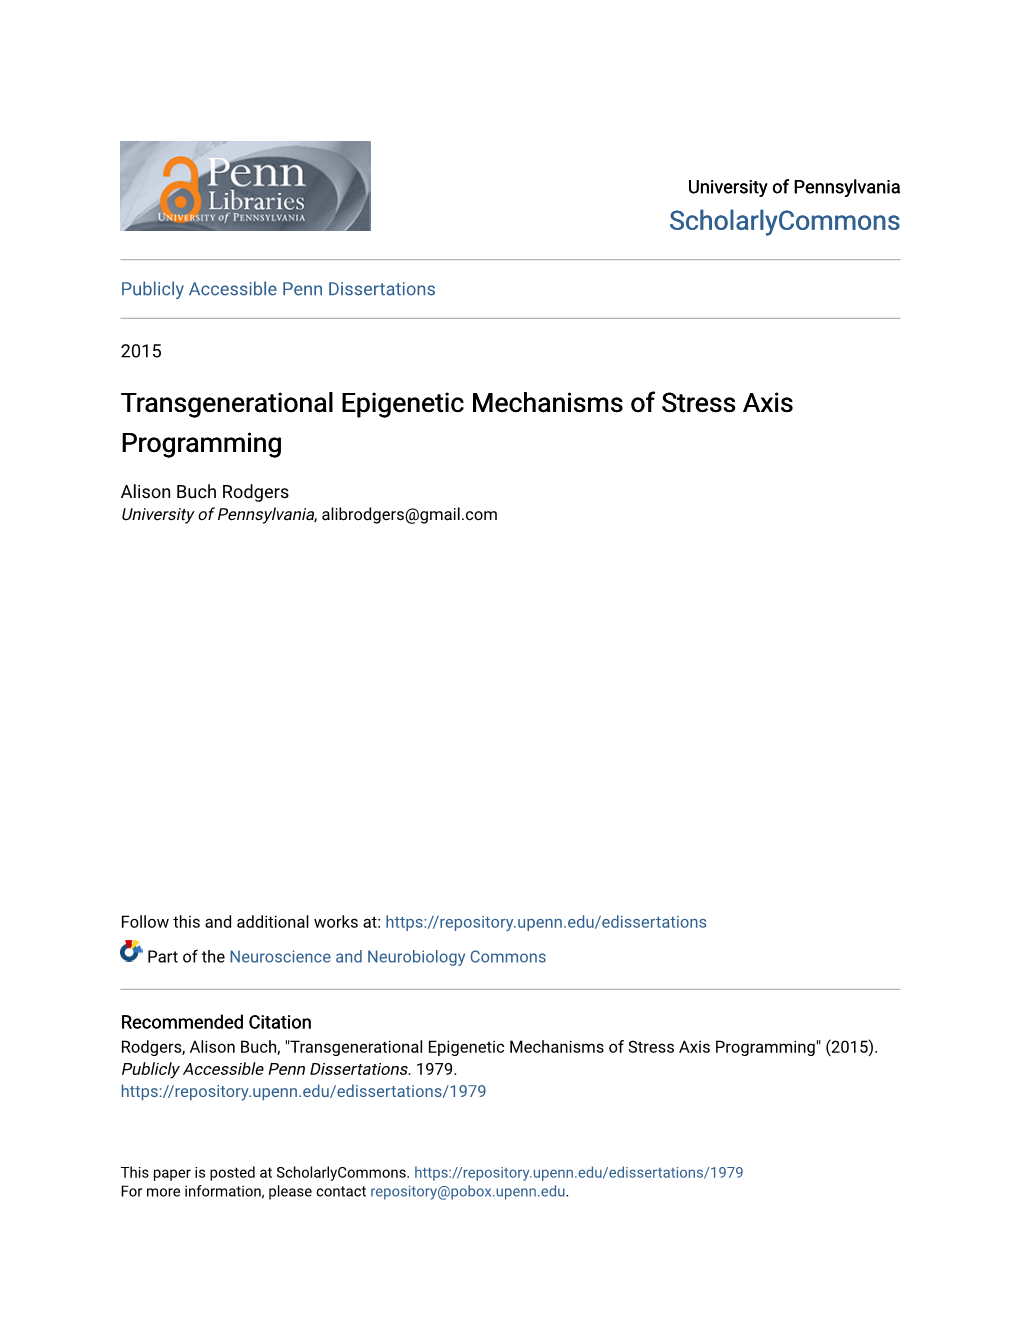 Transgenerational Epigenetic Mechanisms of Stress Axis Programming